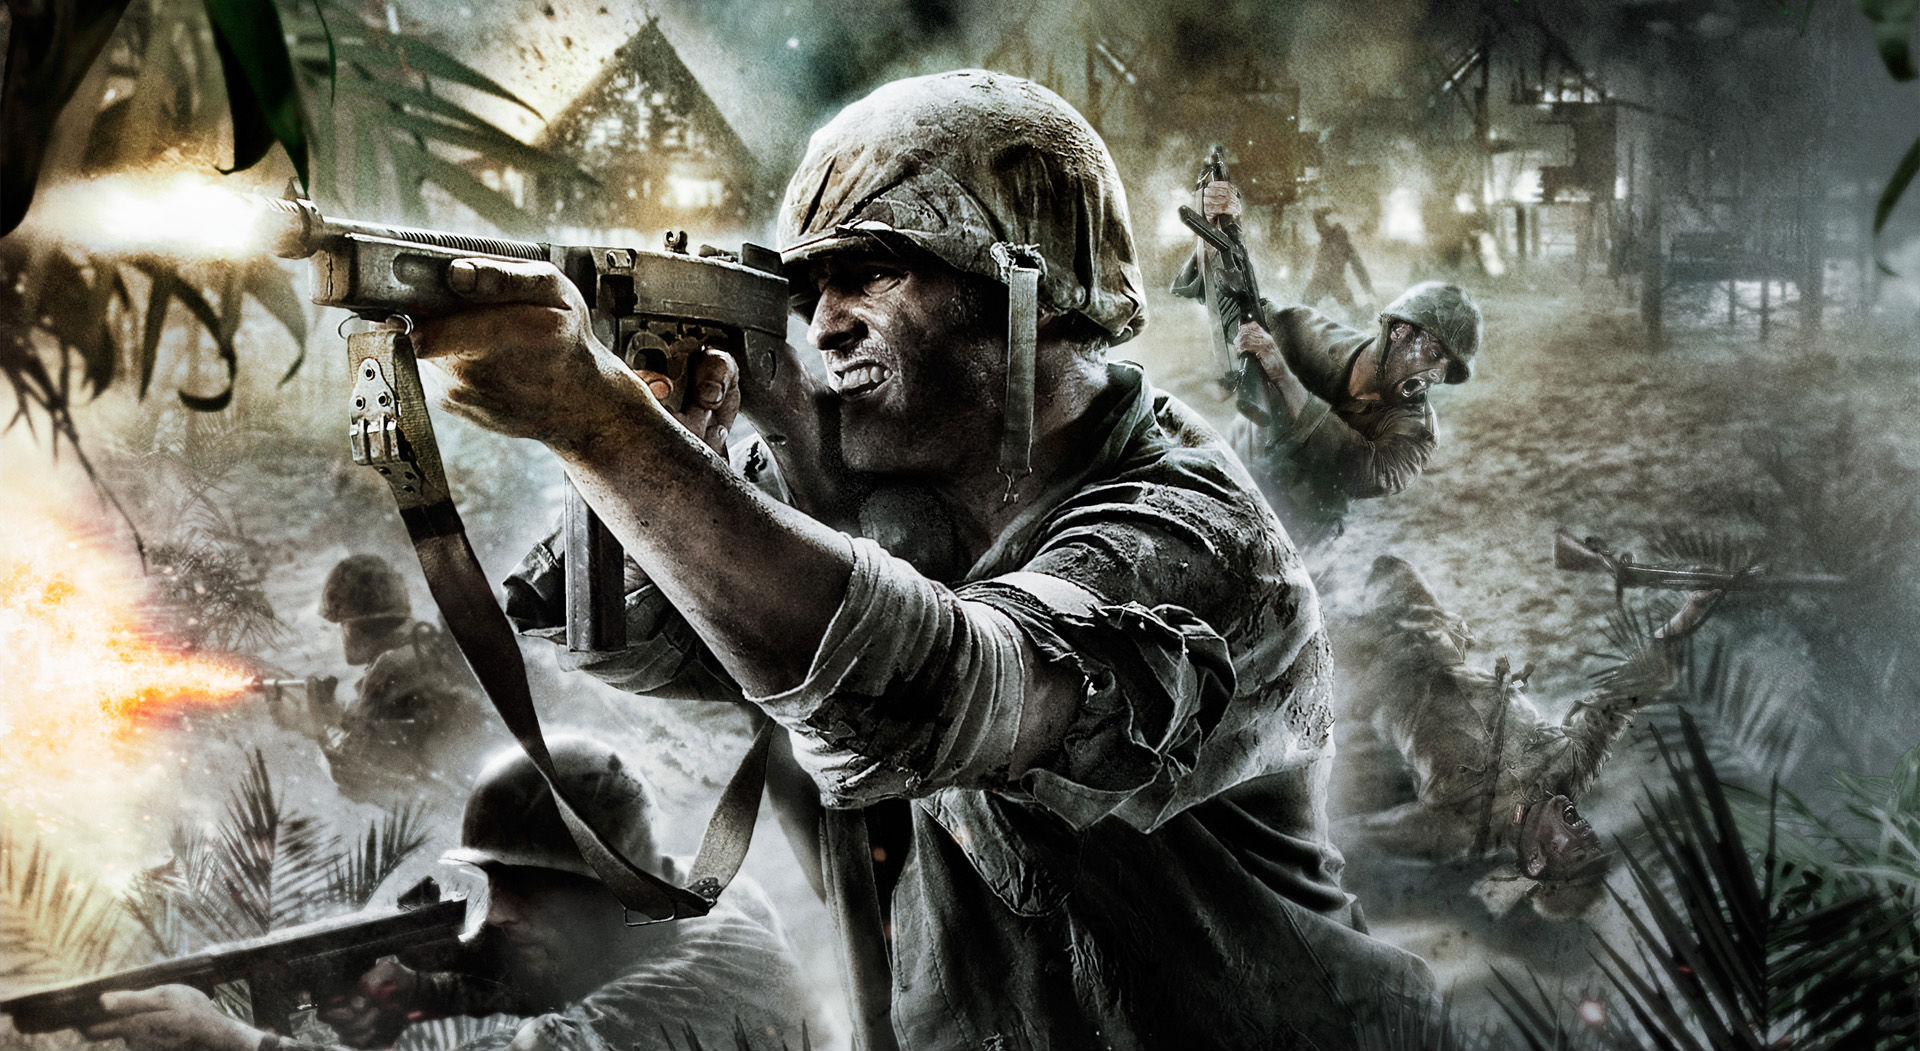 Los mejores fondos de pantalla de Call Of Duty: World At War para la pantalla del teléfono